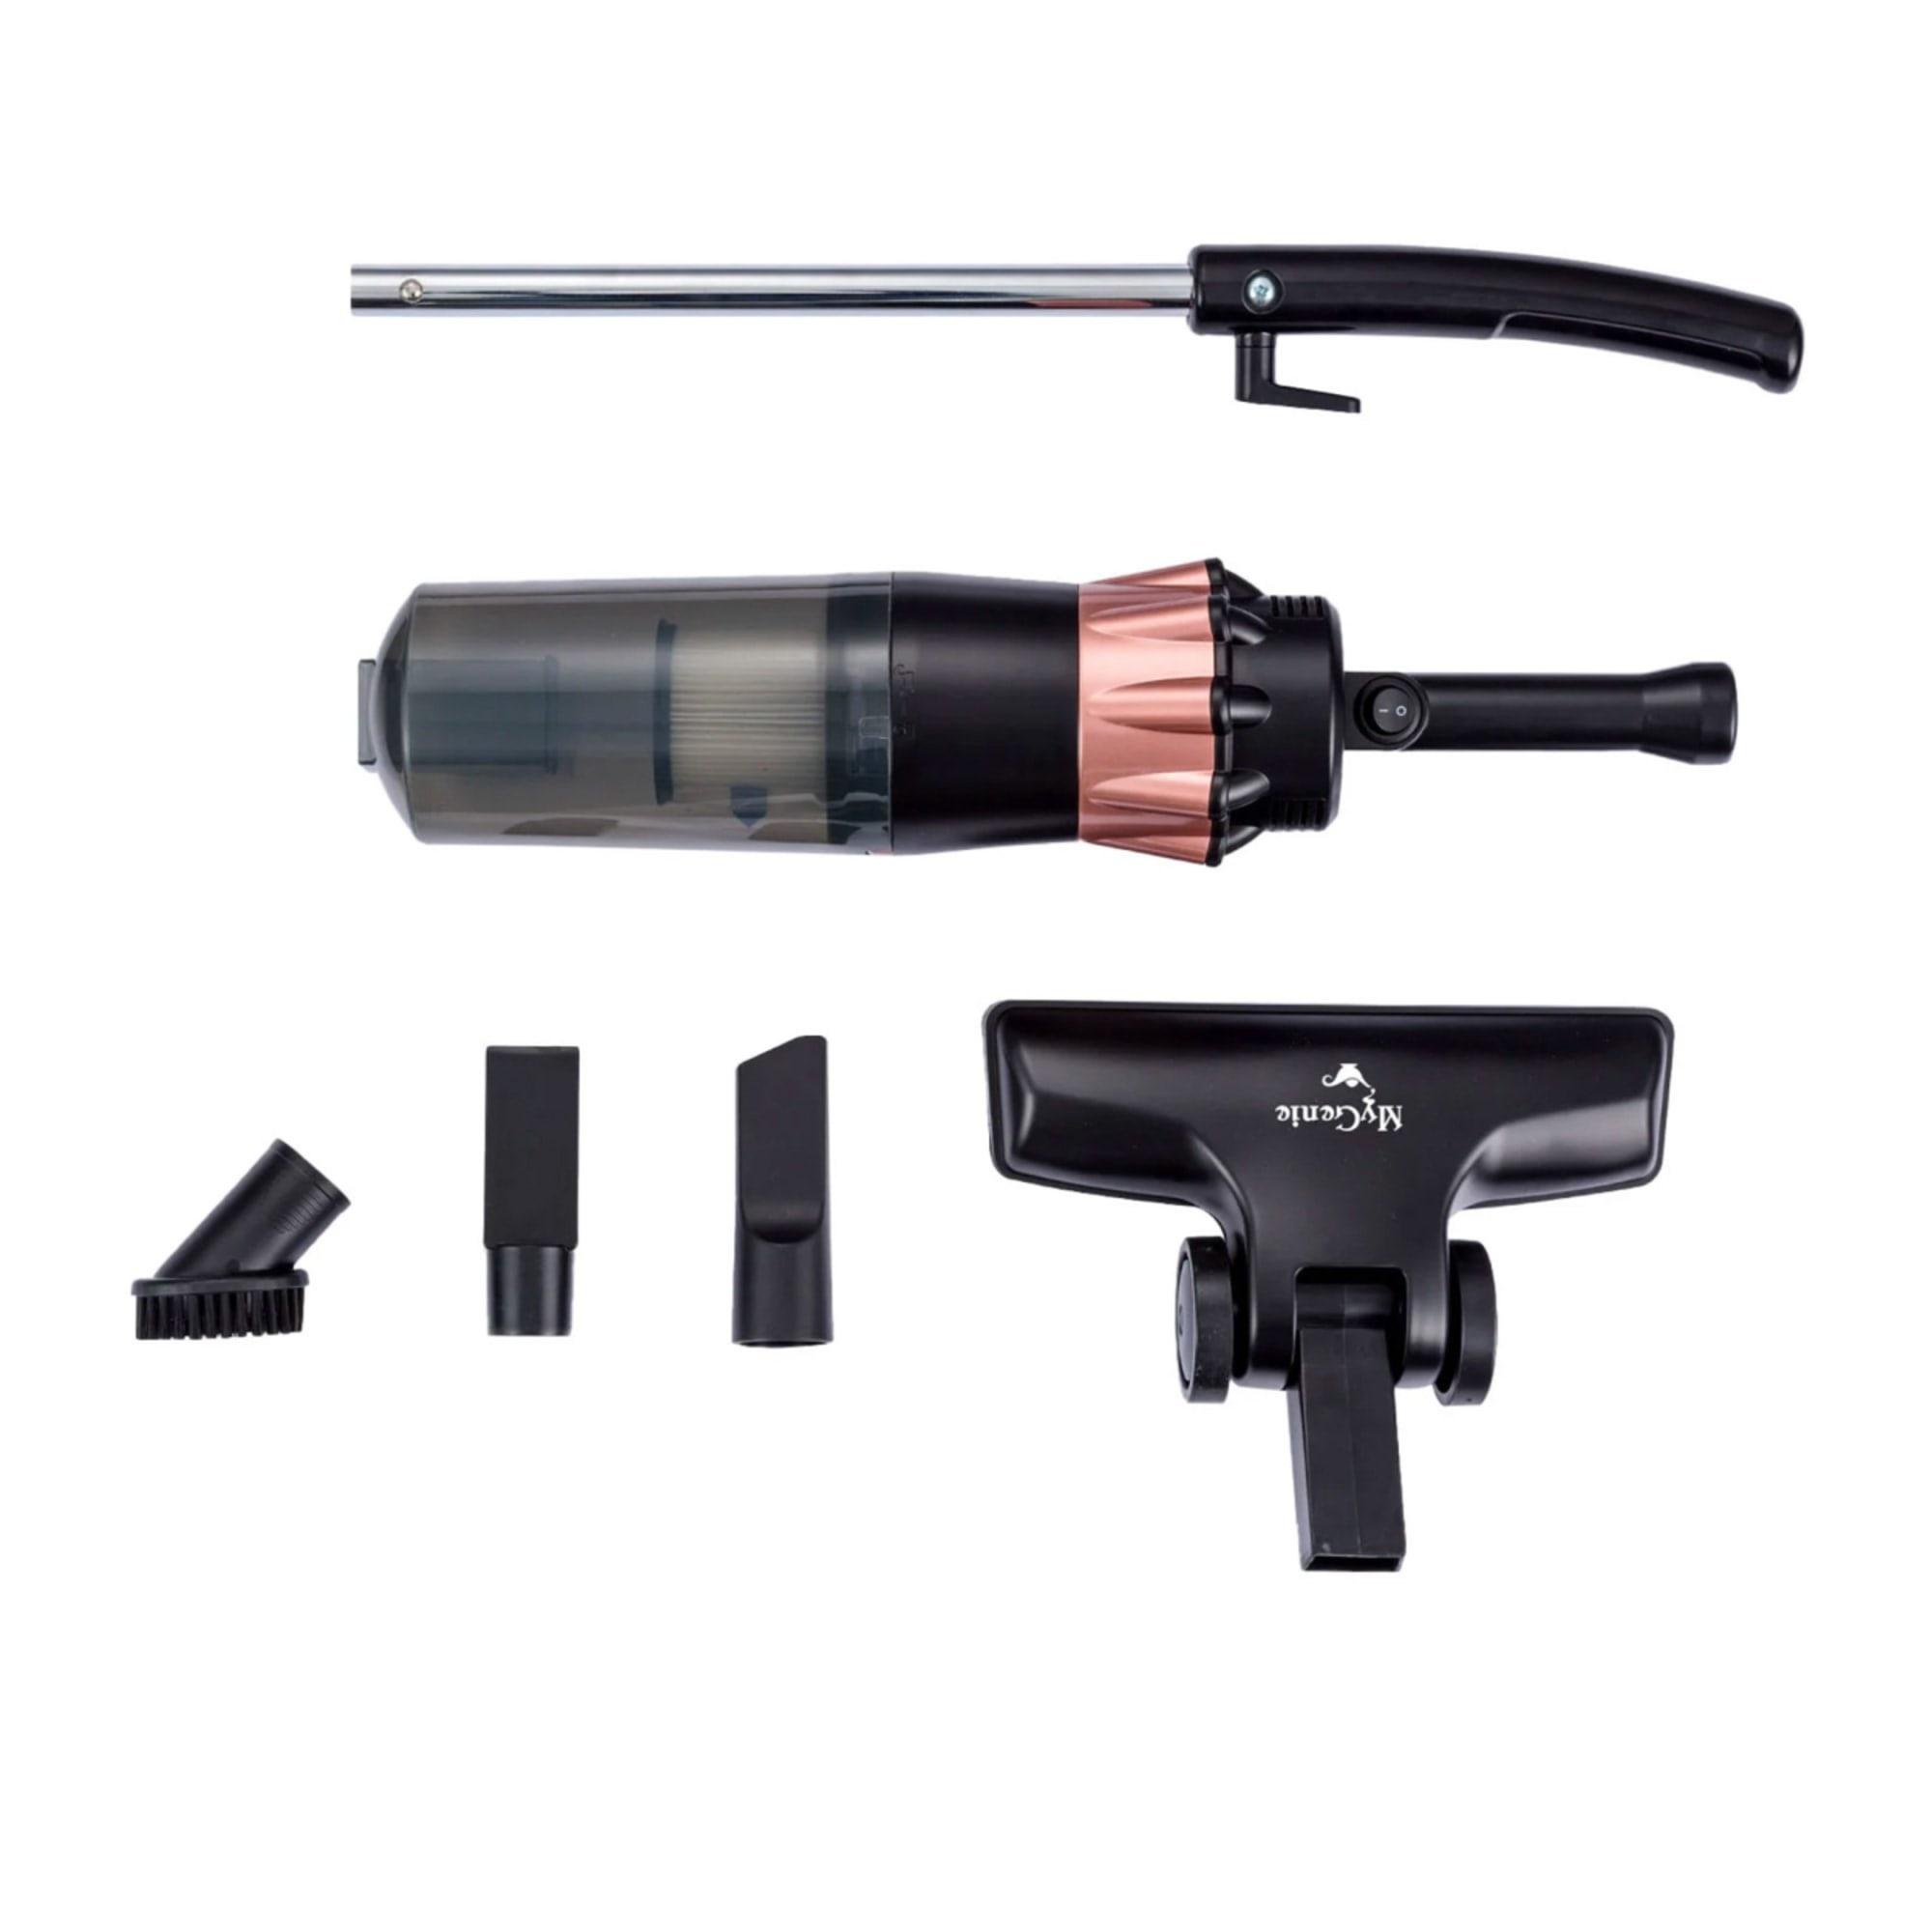 MyGenie CX300 2 in 1 Corded Stick Vacuum Cleaner Black Image 6